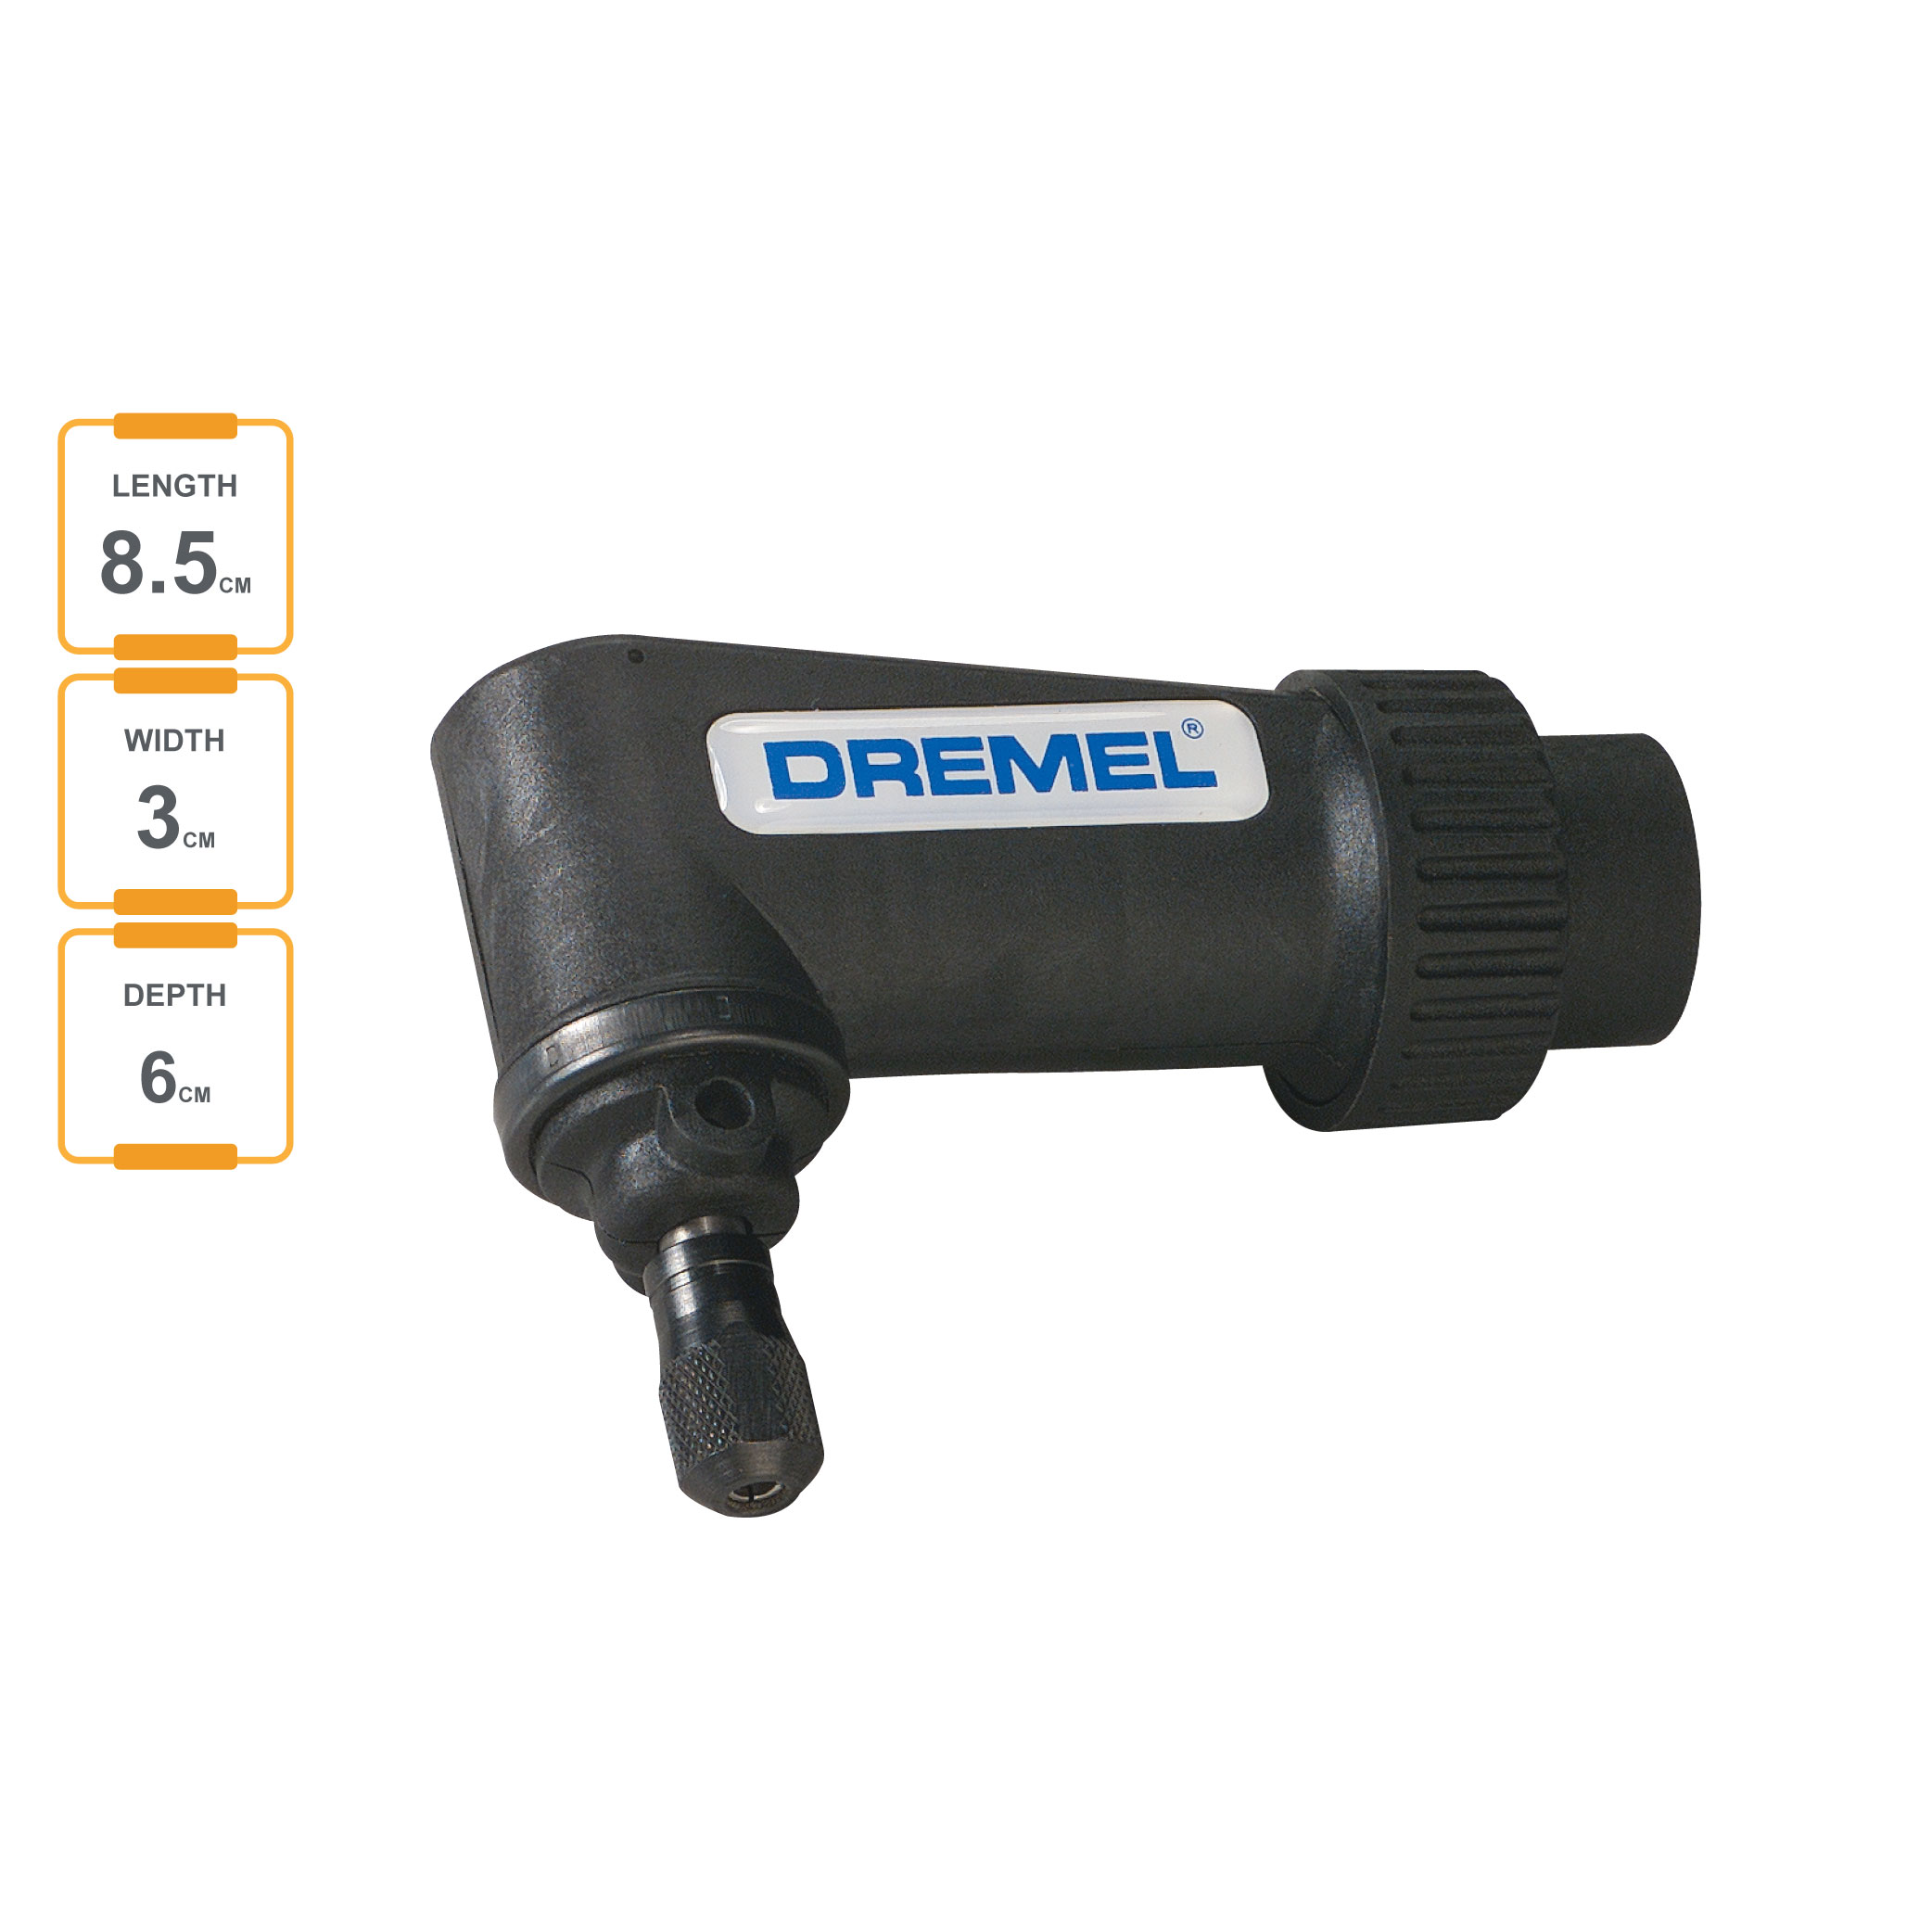 Dremel 2222, DREMEL Flex-Shaft Tool Holder